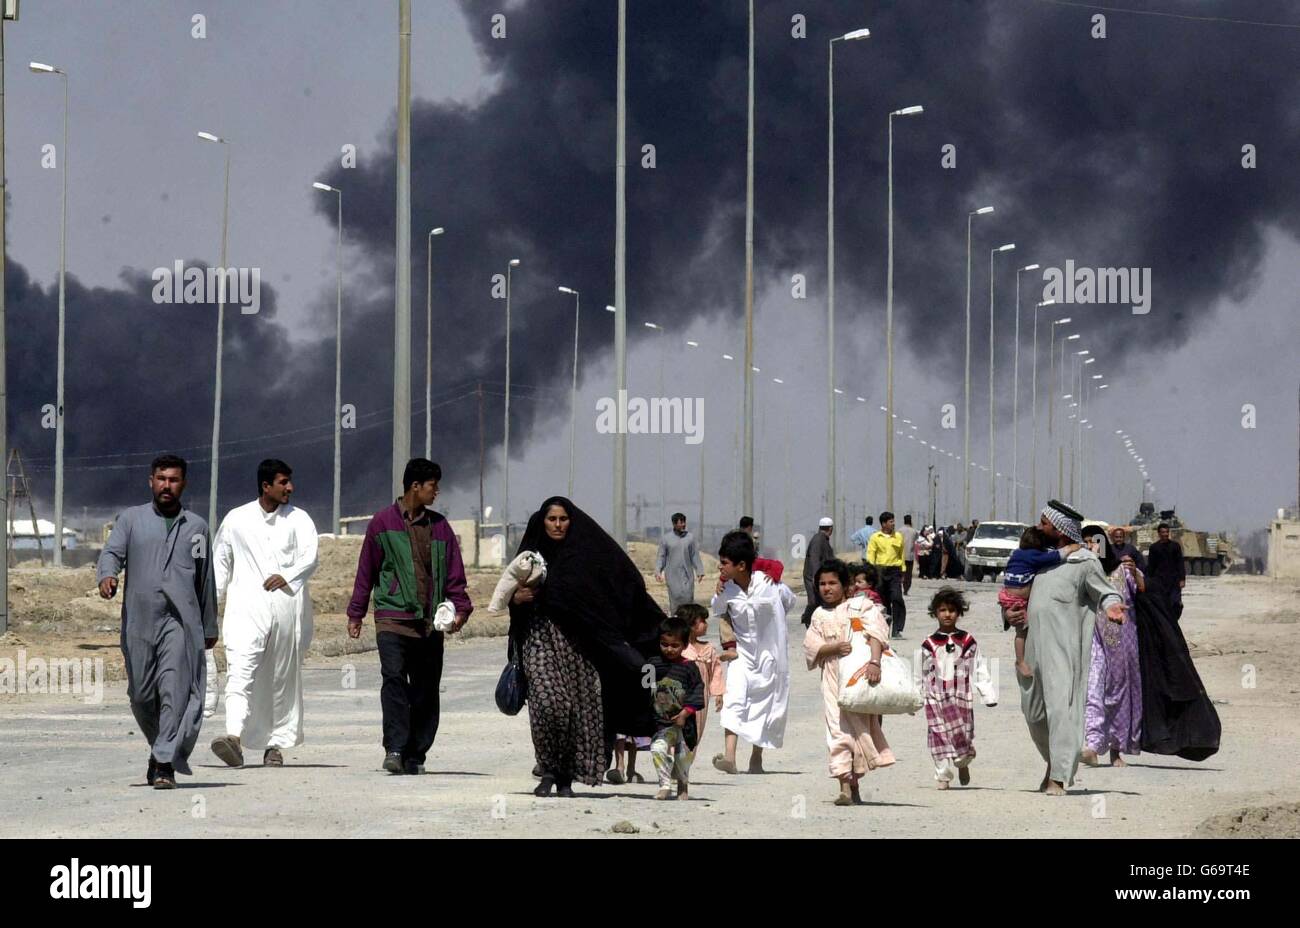 Iraqis Flee Basra. Locals flee the burning town of Basra in Iraq. Stock Photo